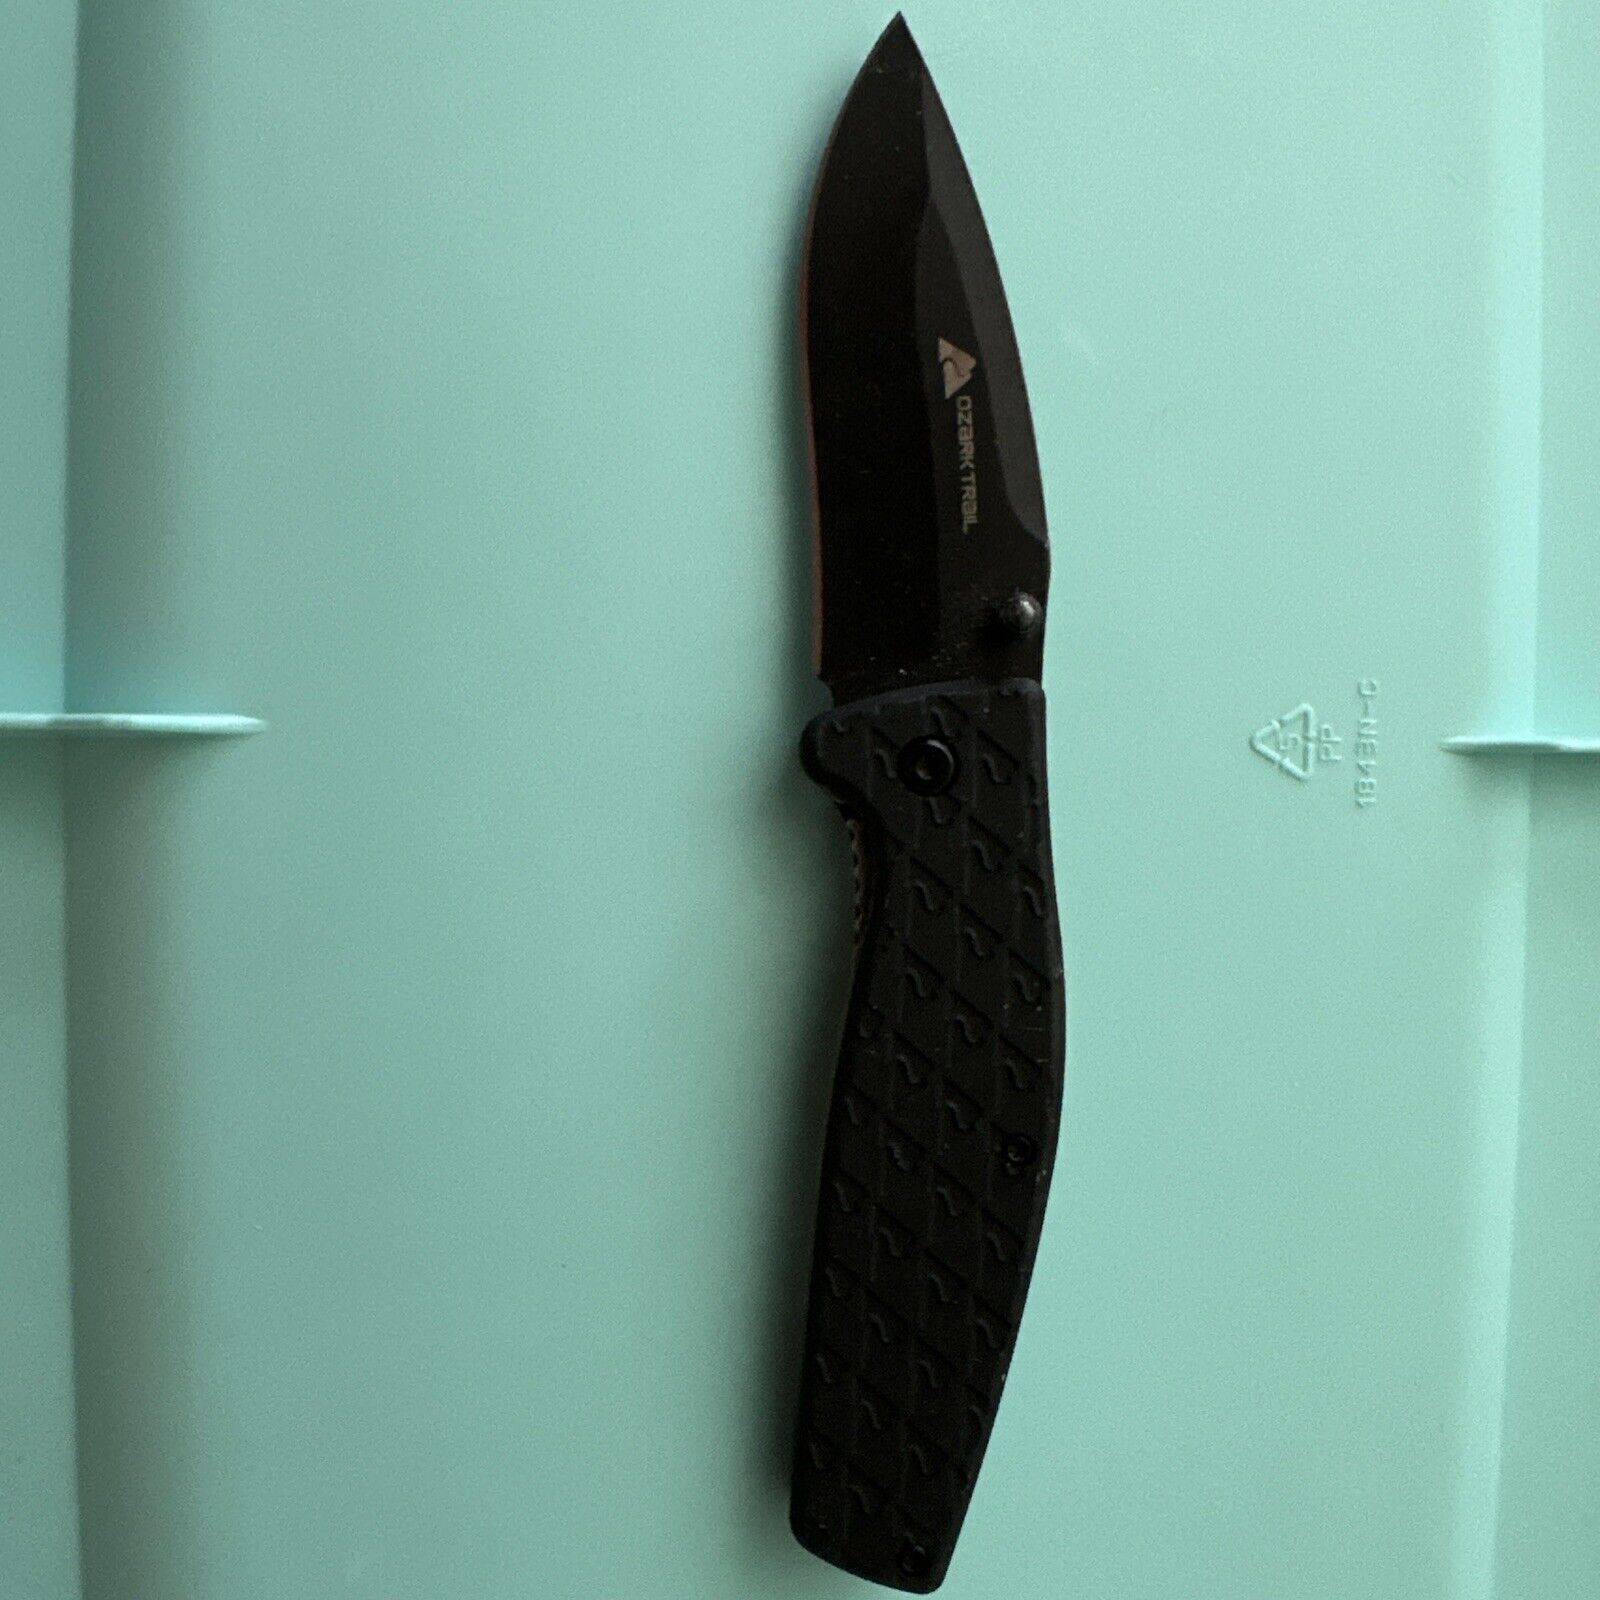 Ozark Trail 7-Inch Folding Knife Black Rubber Handle Stainless Steel Blade